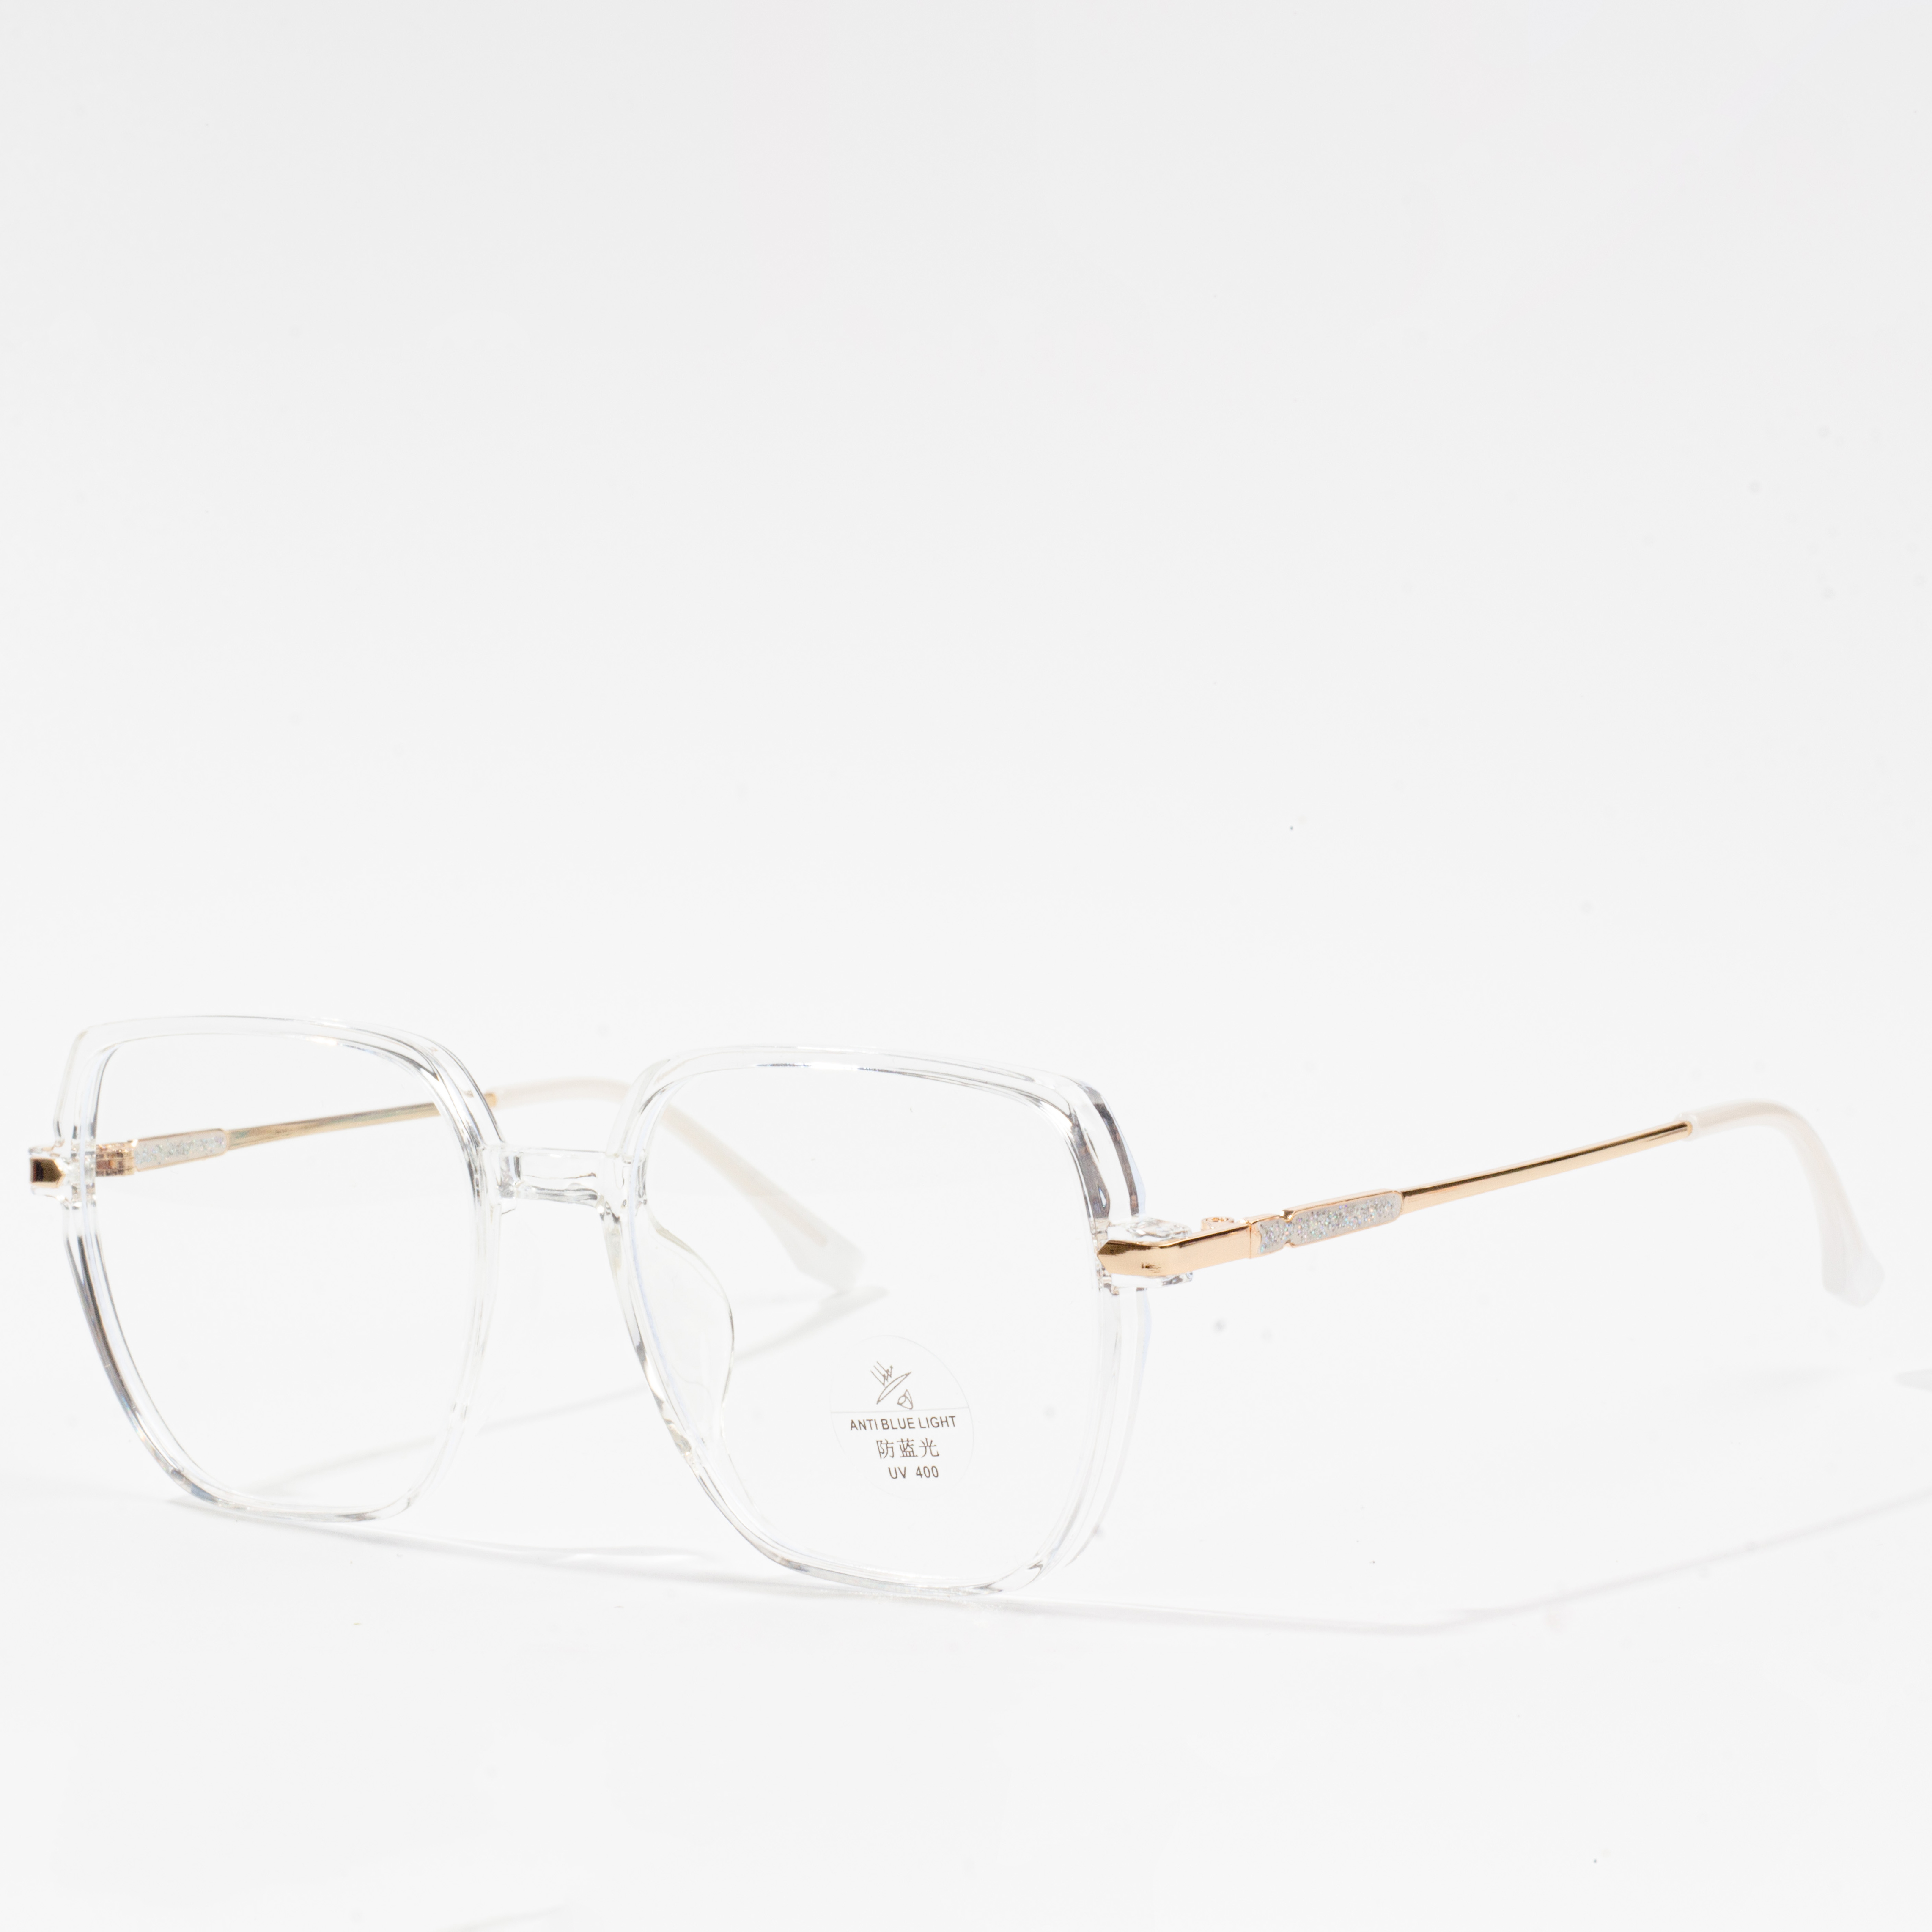 popular women's eyeglass frames